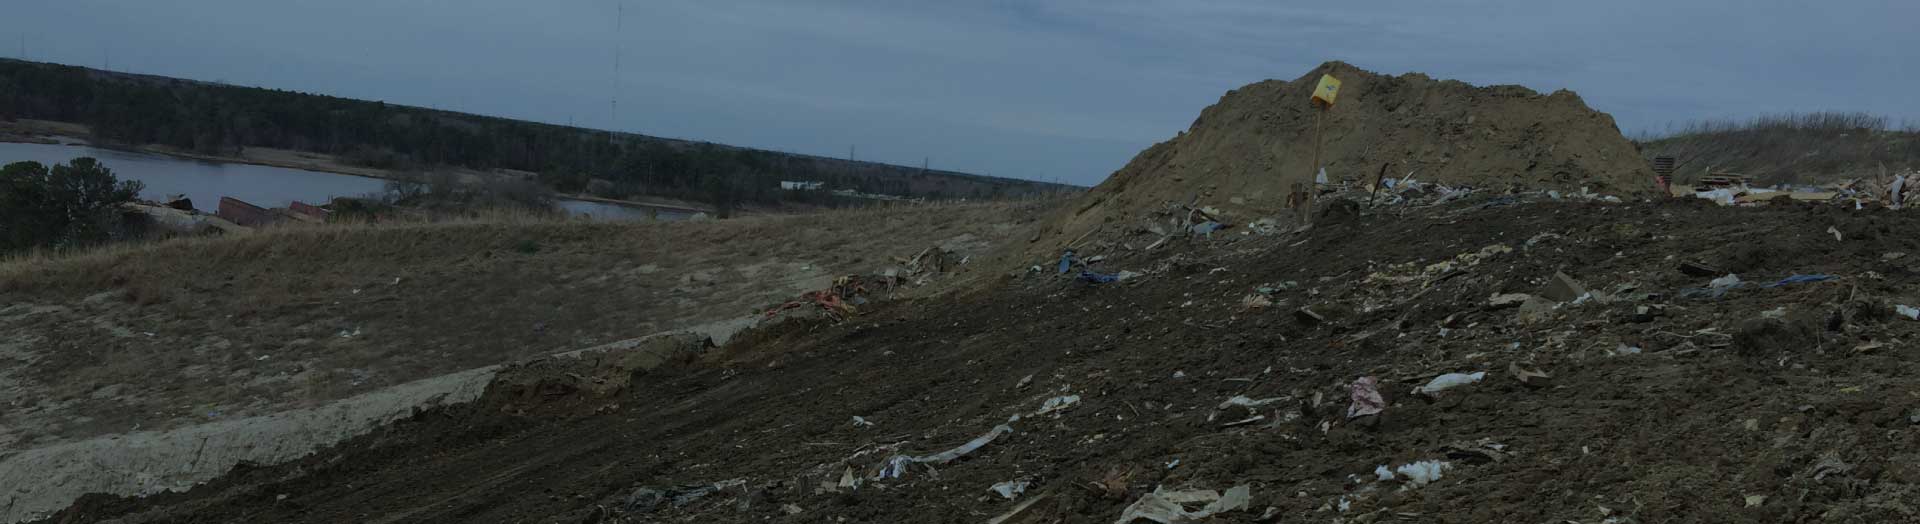 landfill in chesapeake